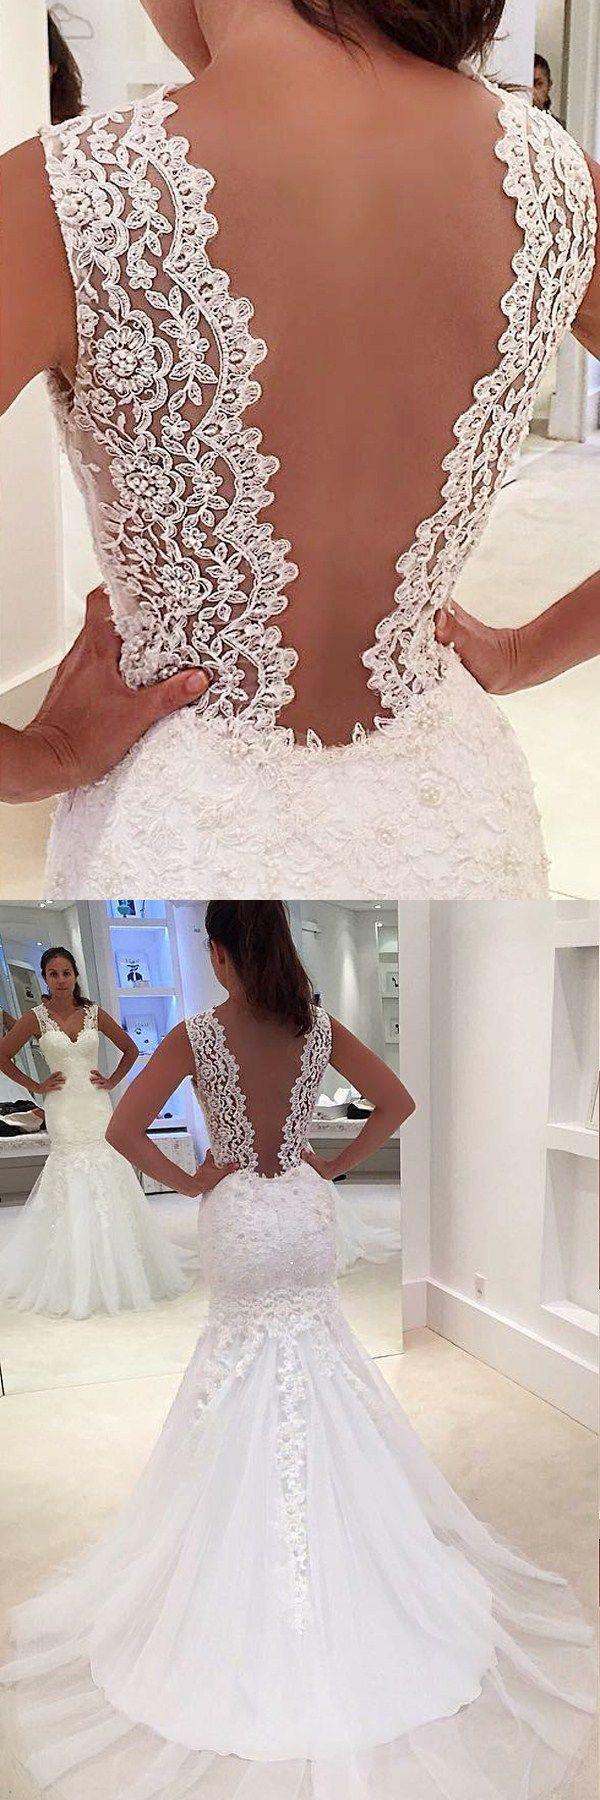 زفاف - Mermaid V-Neck Court Train Backless White Chiffon Wedding Dress With Lace